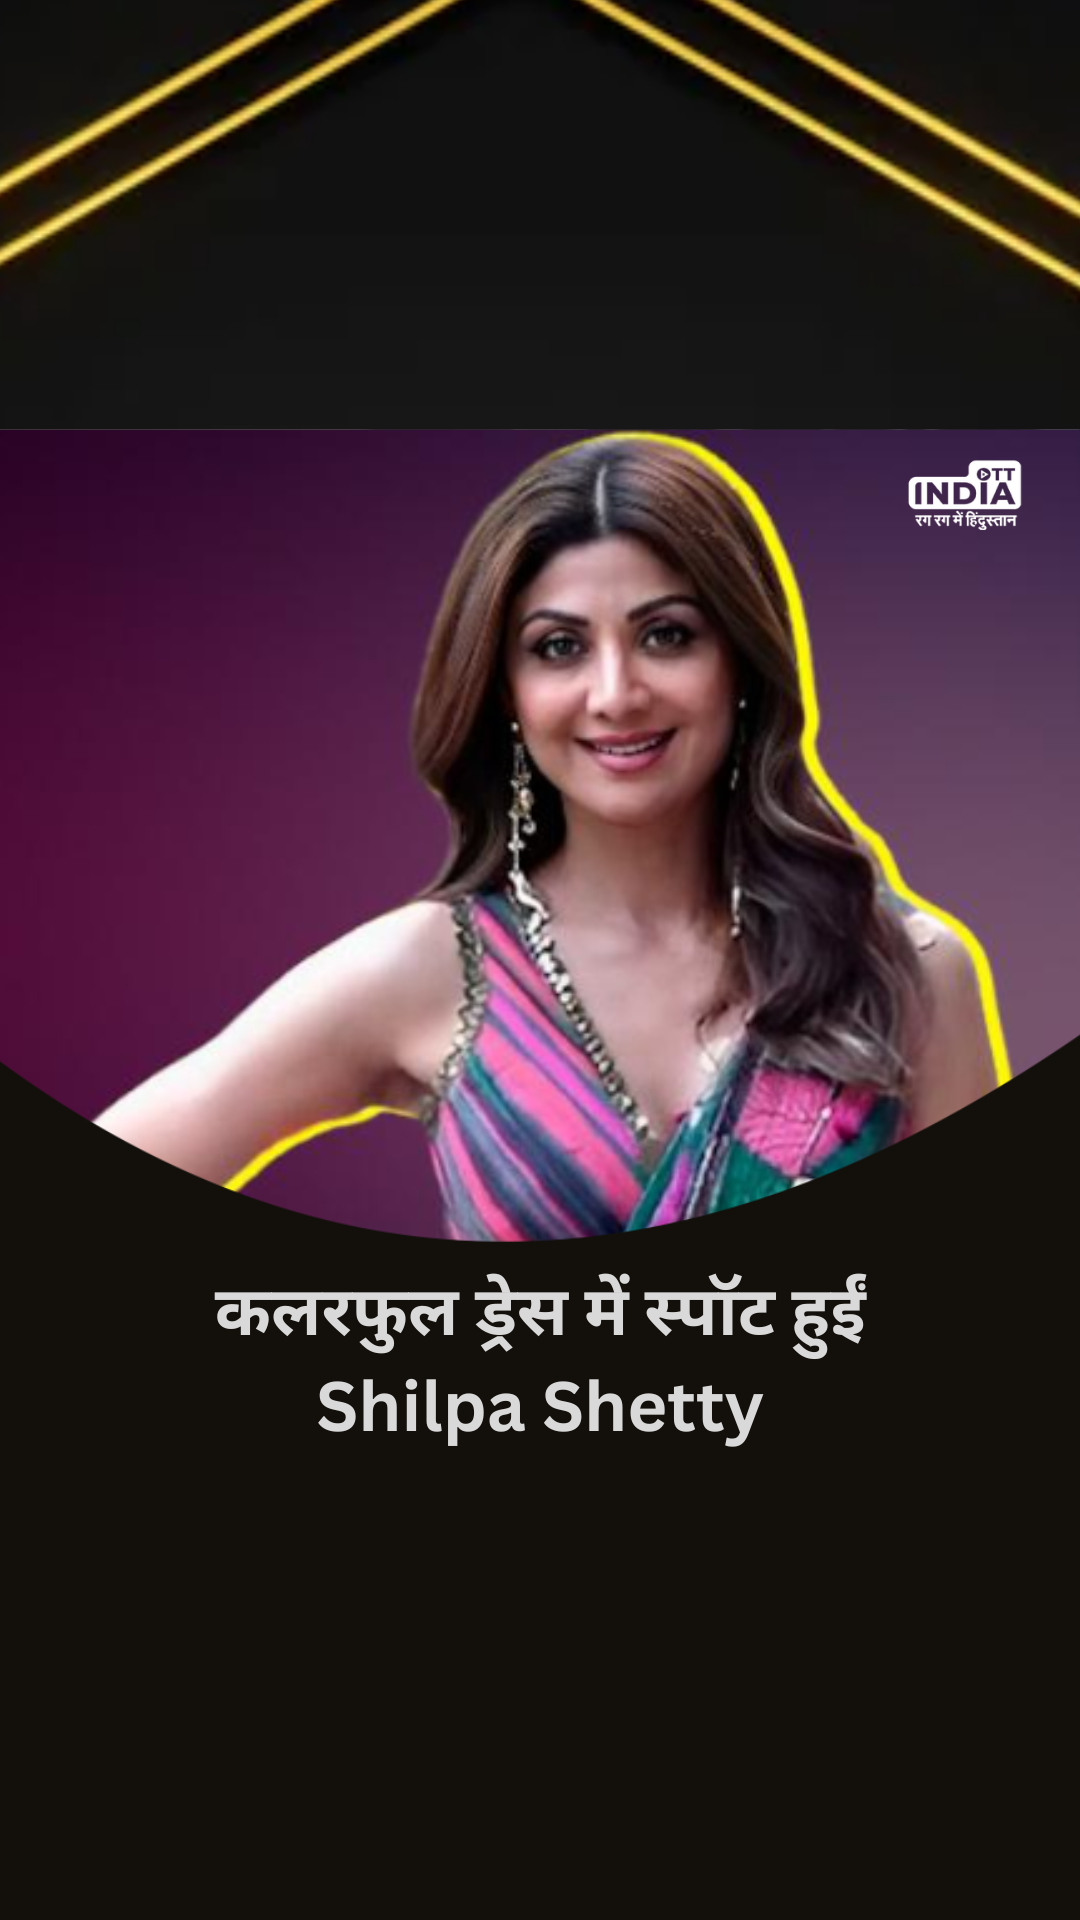 कलरफुल ड्रेस में स्पॉट हुईं Bollywood Actress Shilpa Shetty